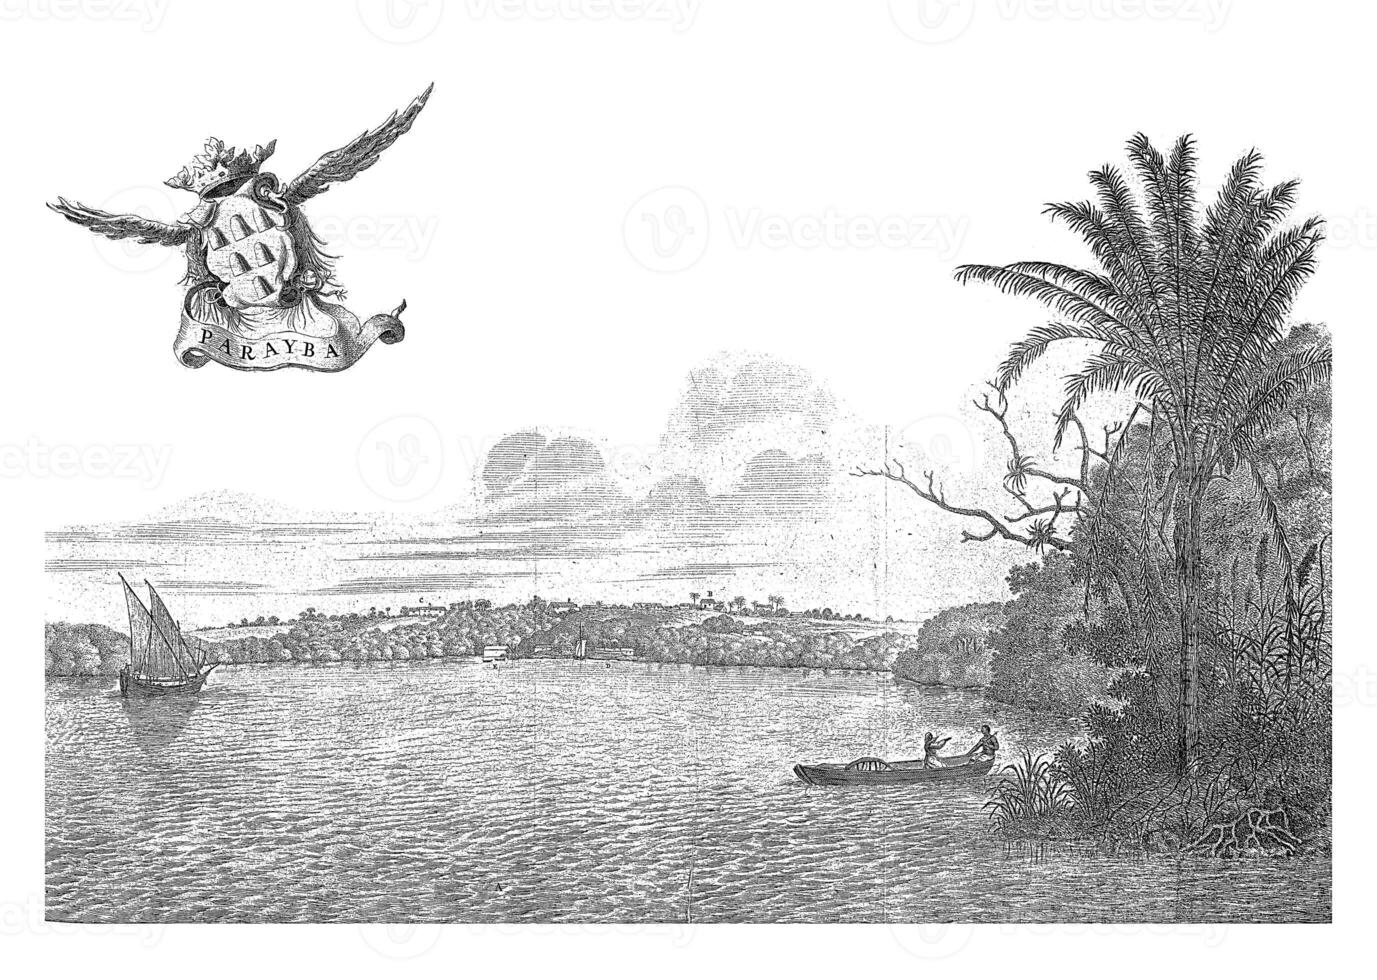 View of Paraiba, c. 1636-1644, vintage illustration. photo